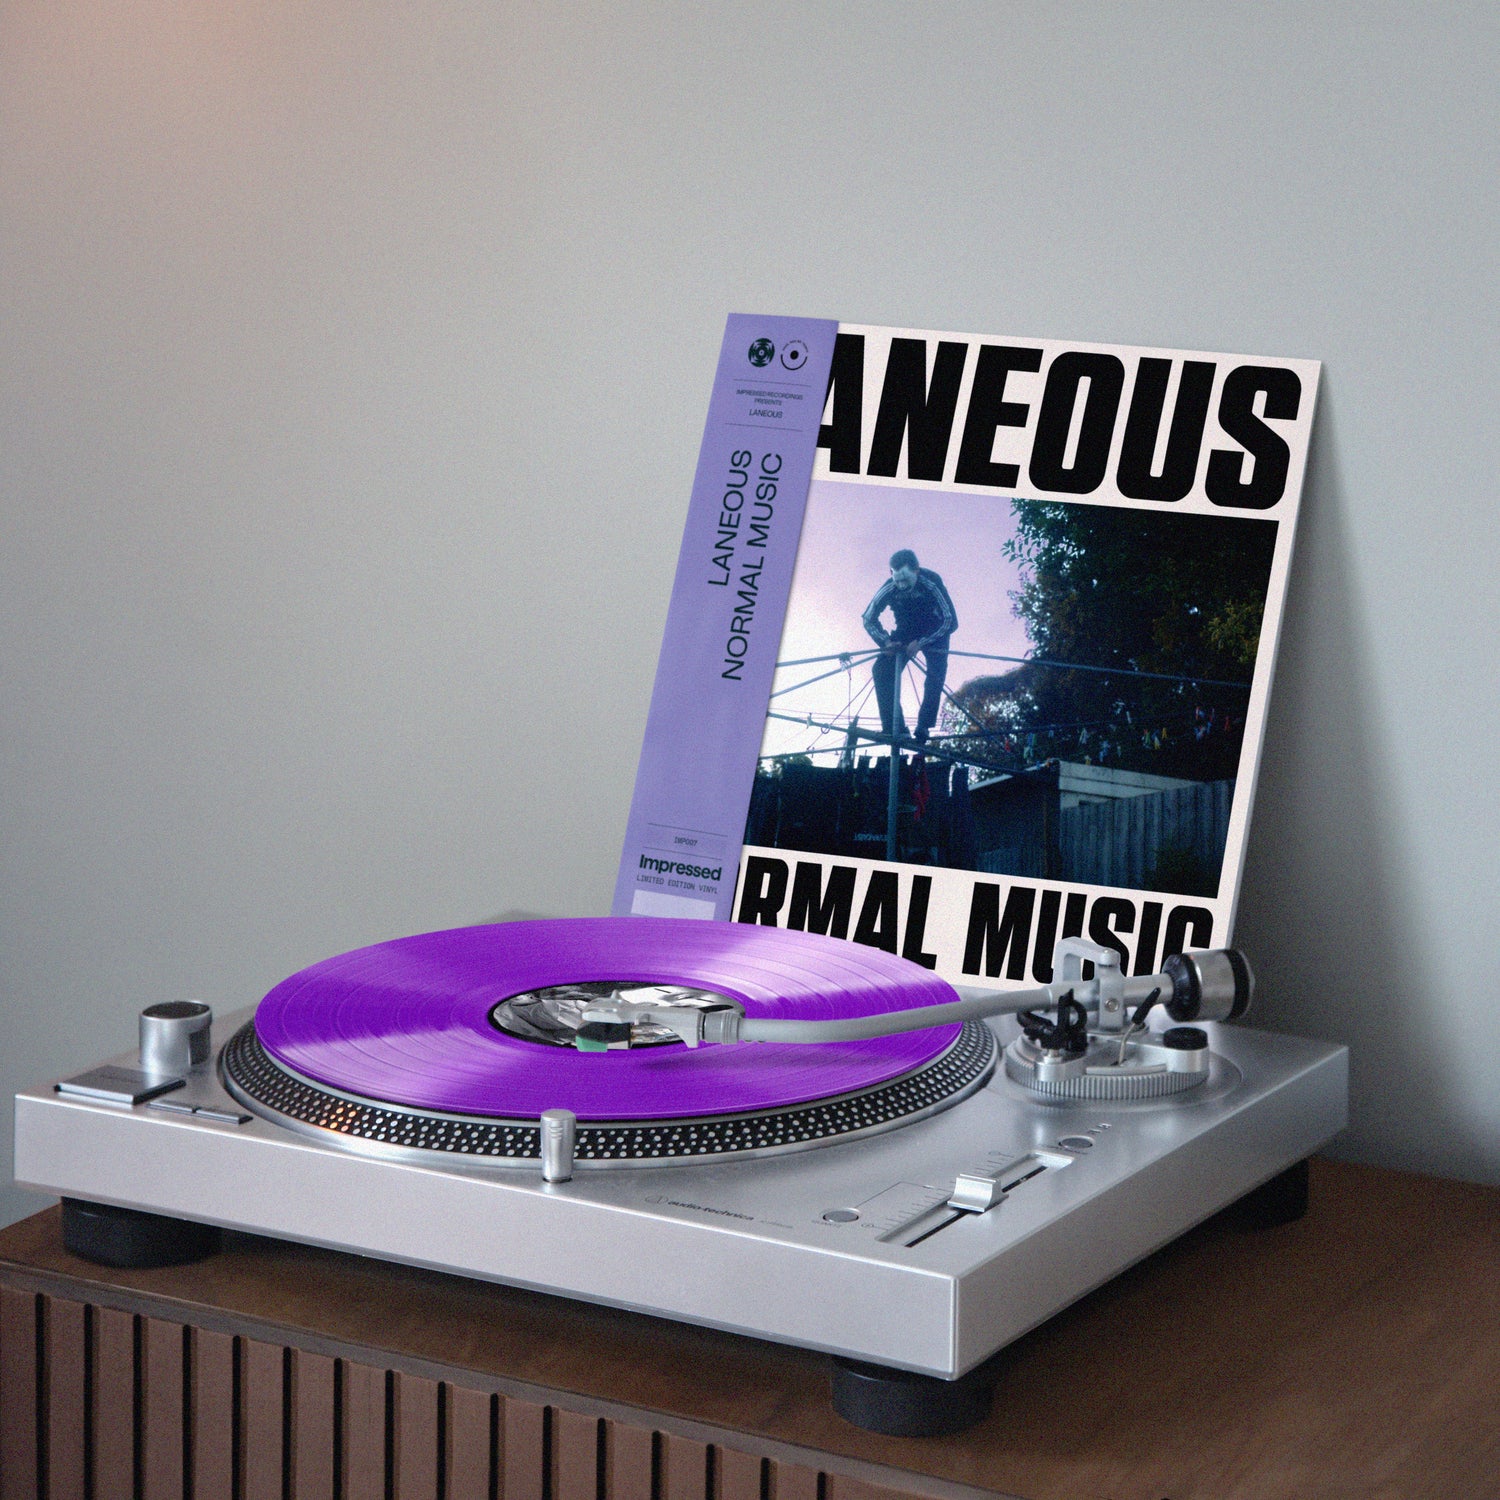 Laneous, Laneous vinyl,  Normal Music EP, Normal Music EP vinyl, limited edition vinyl, exclusive vinyl, purple vinyl, vinyl on turntable